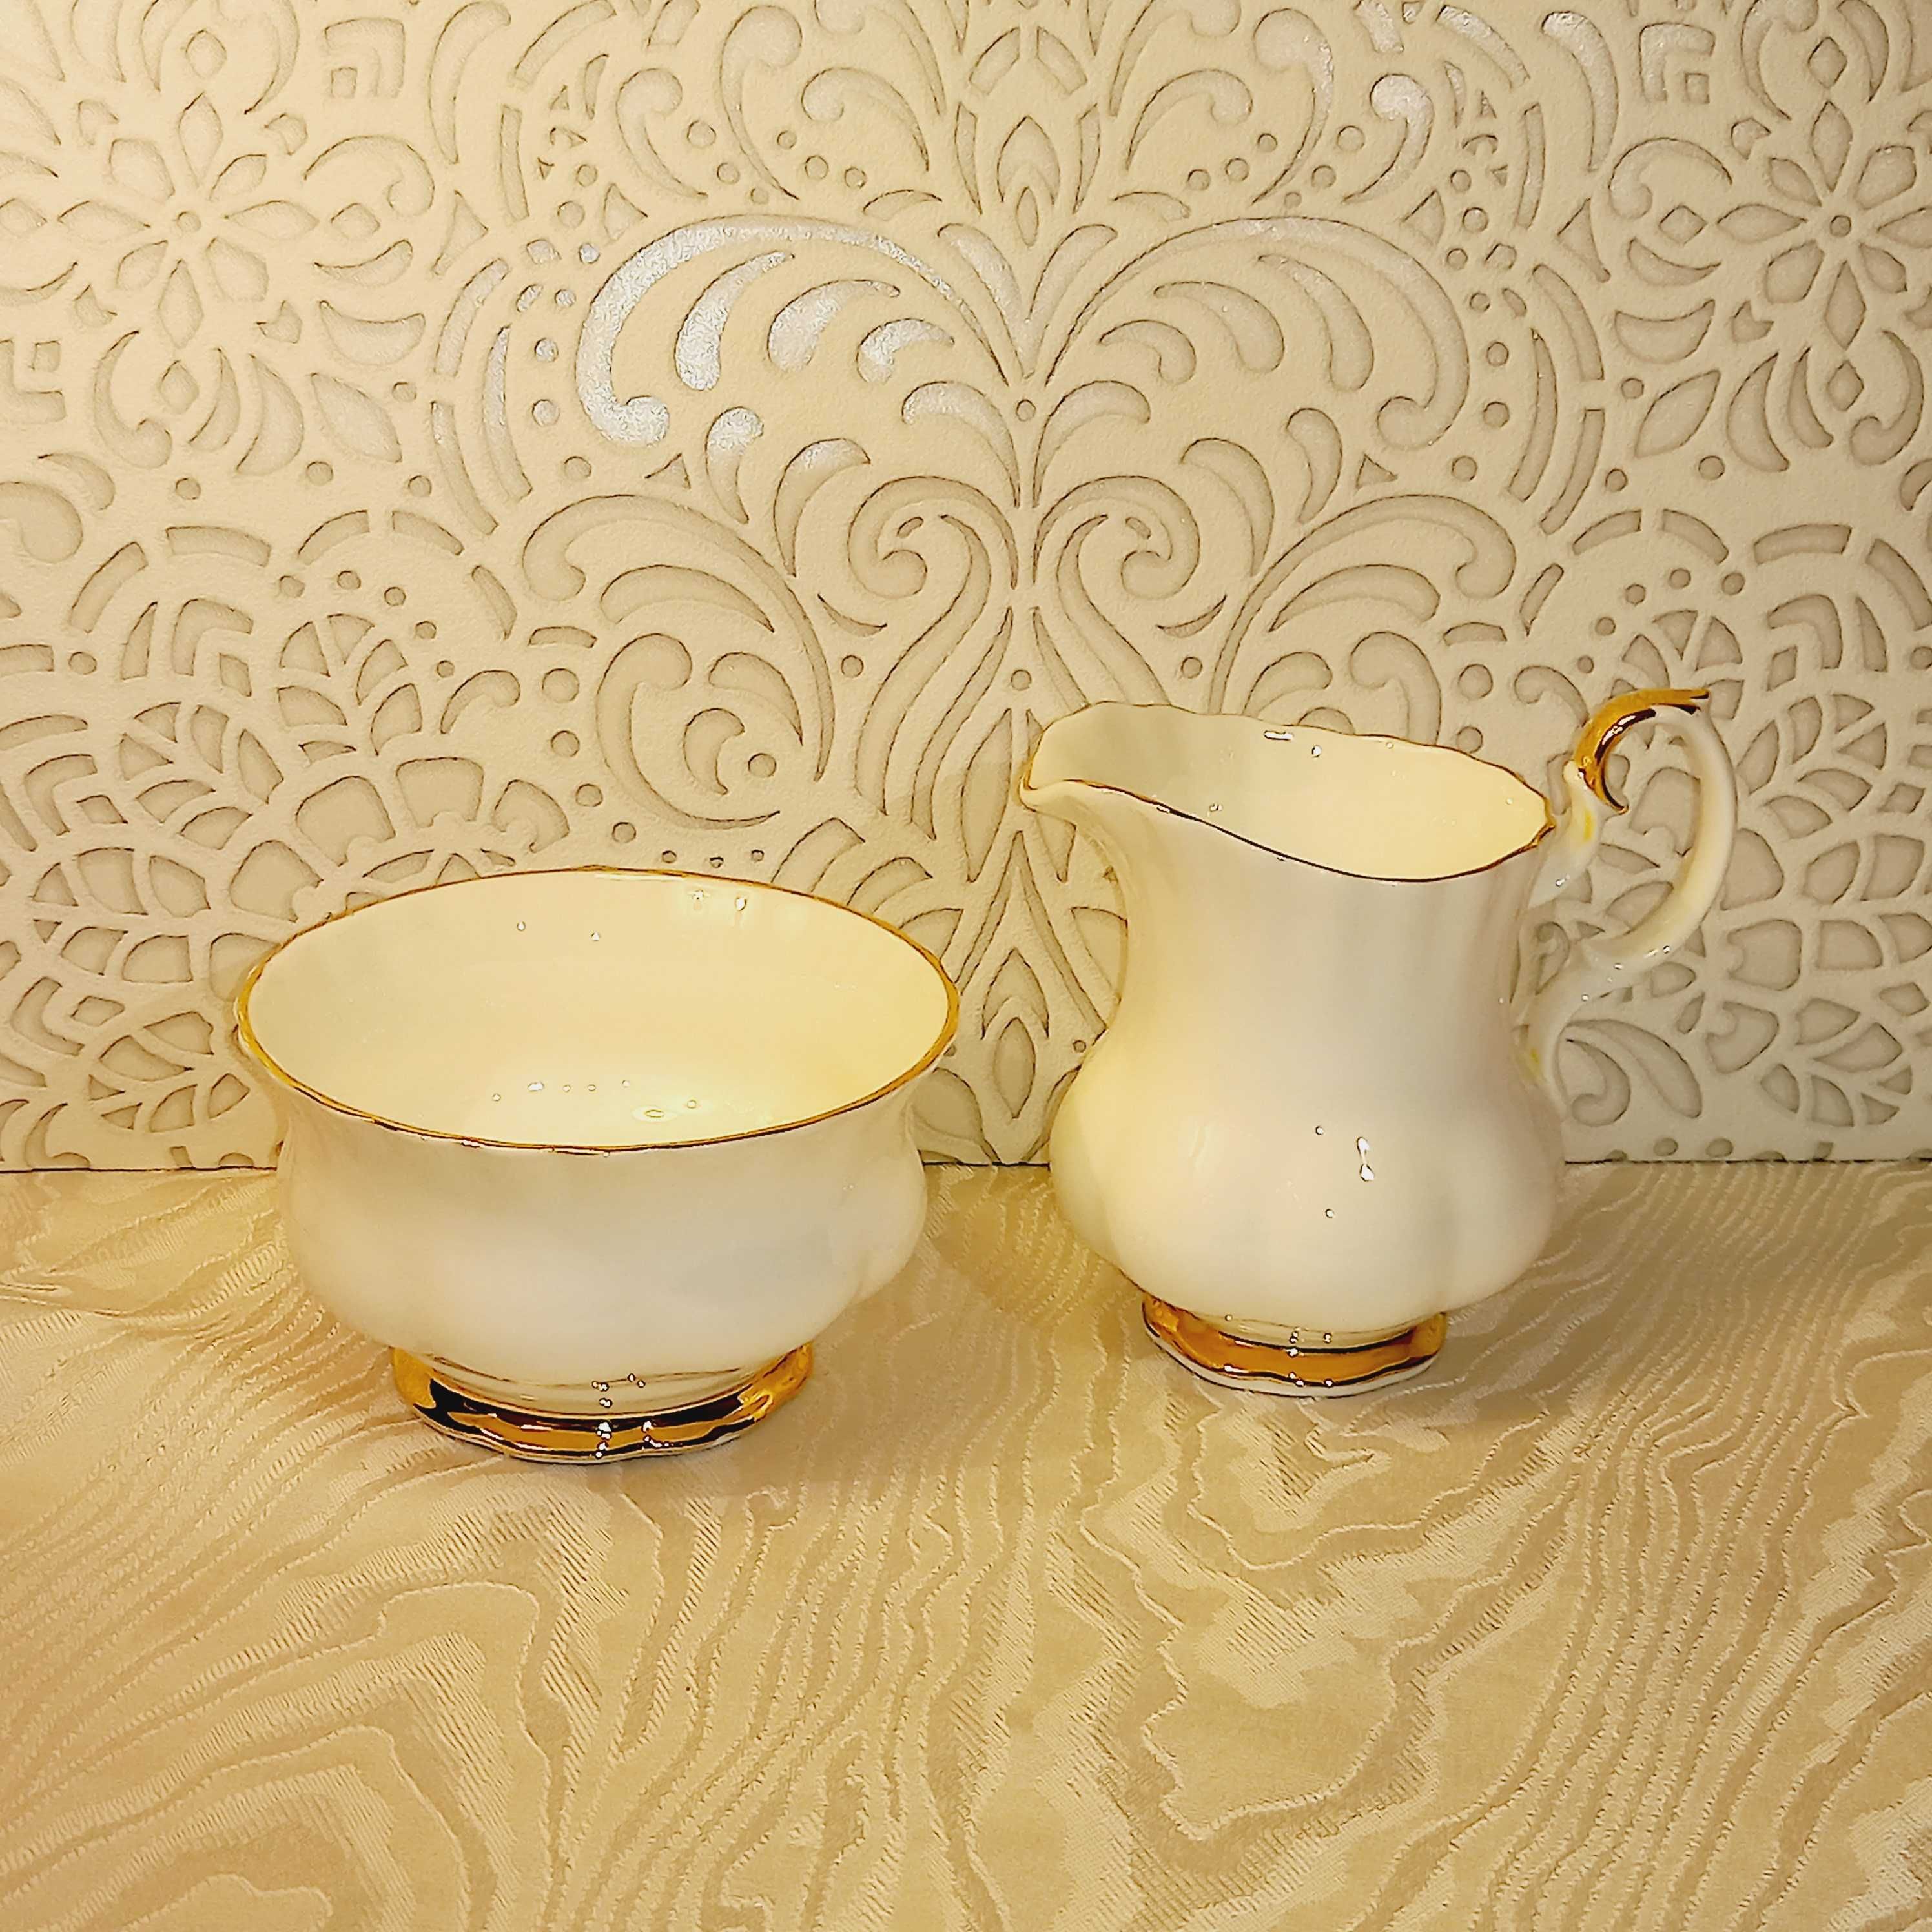 Vintage Angielska Porcelana Kostna Royal Albert Val D'or Serwis kawowy